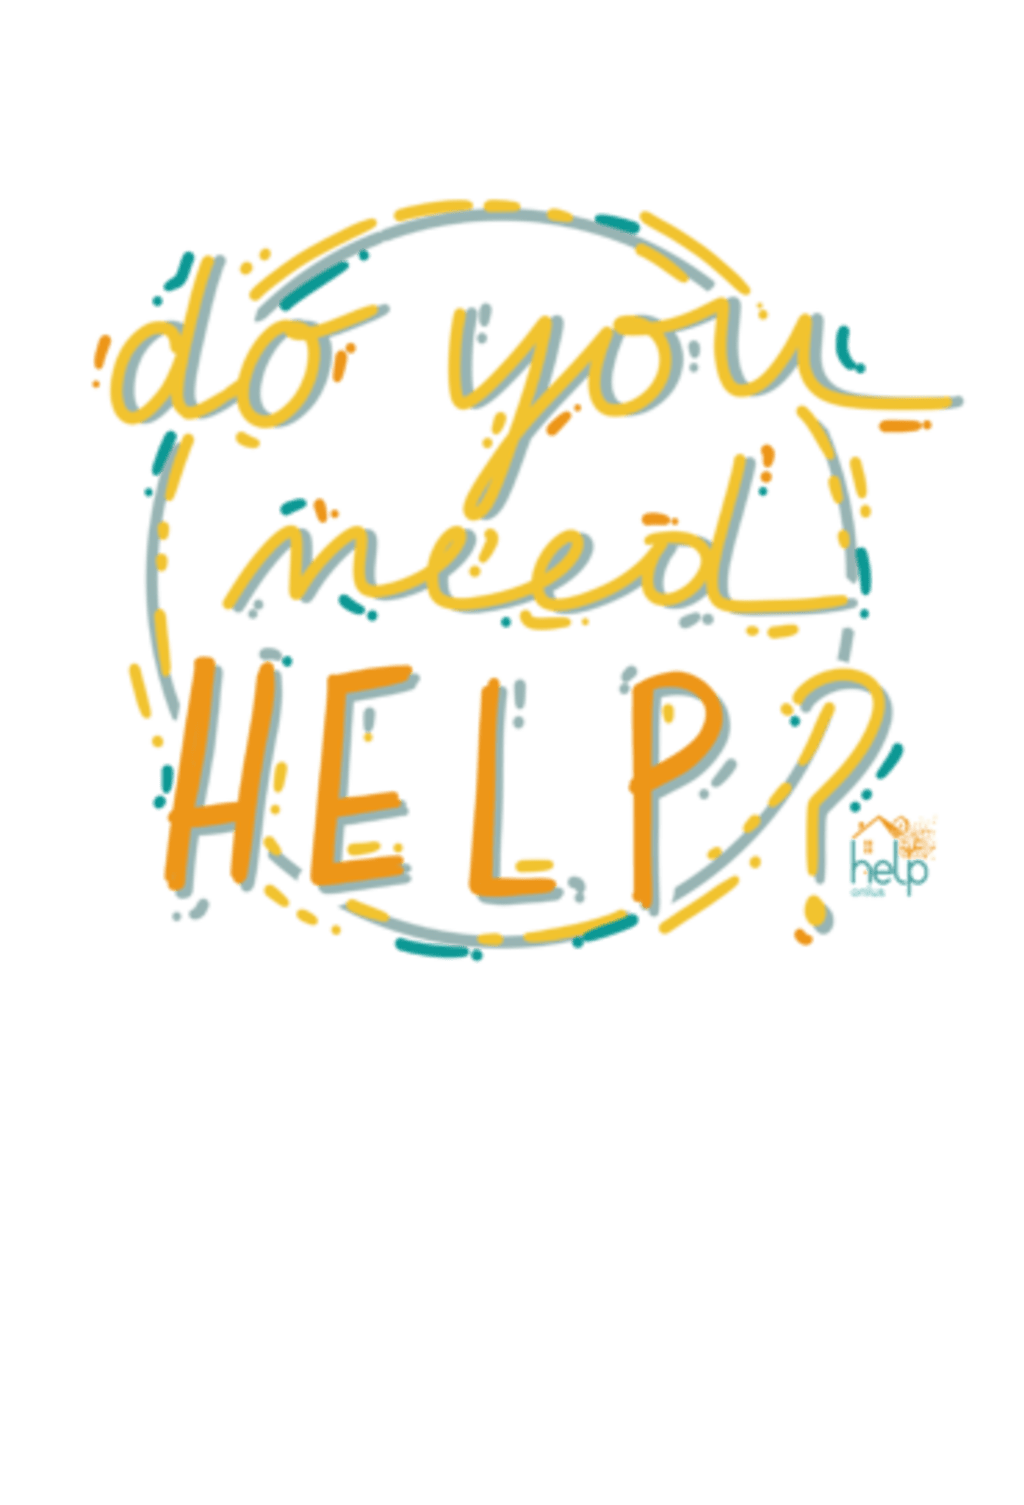 Do you need HELP?